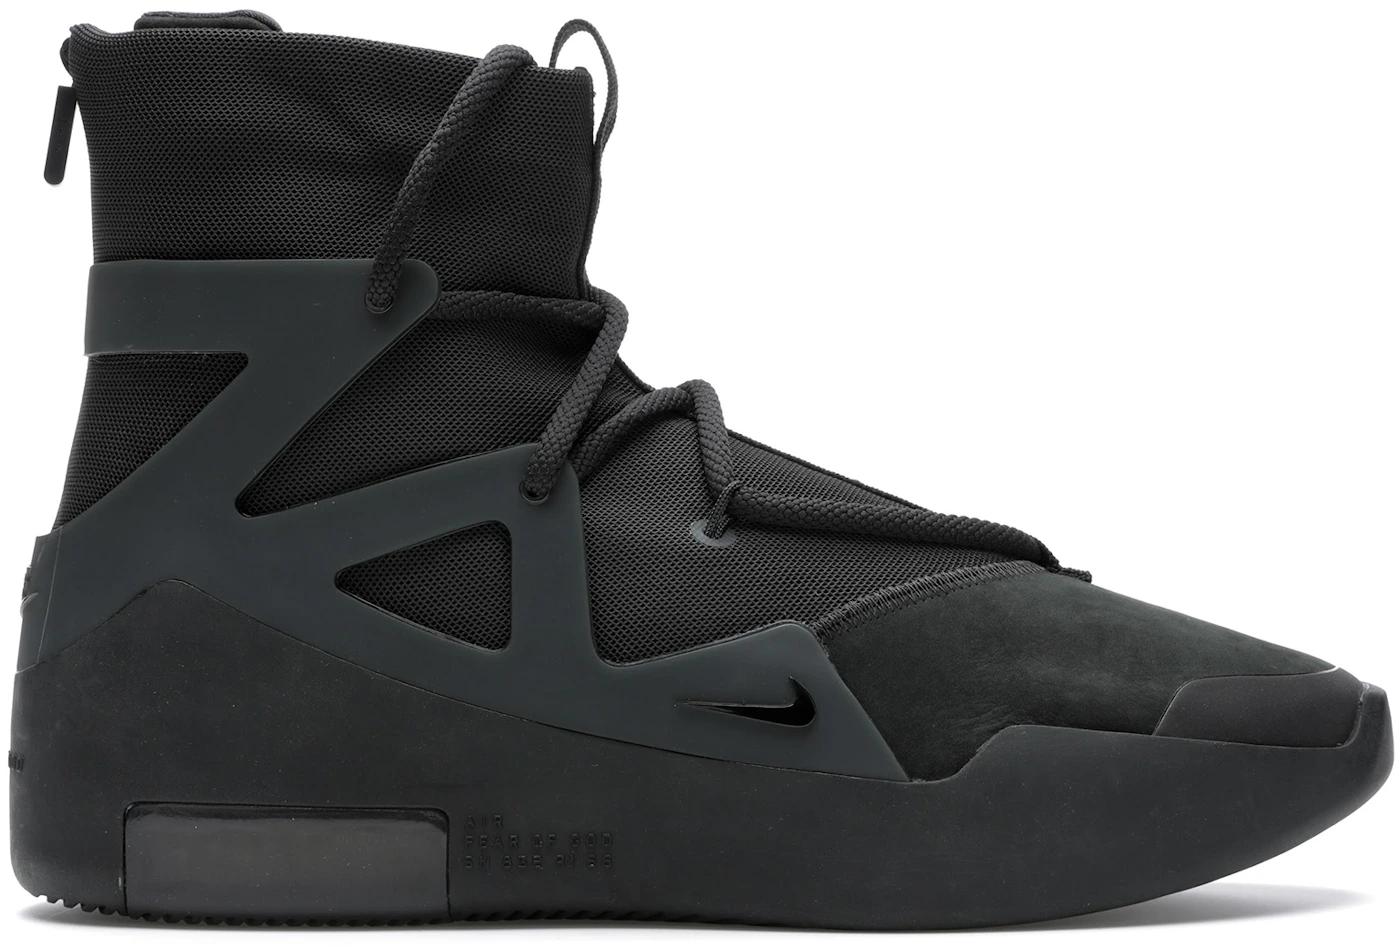 Jerry Lorenzo Unveils More Nike Fear of God 1 Colourways - Sneaker Freaker